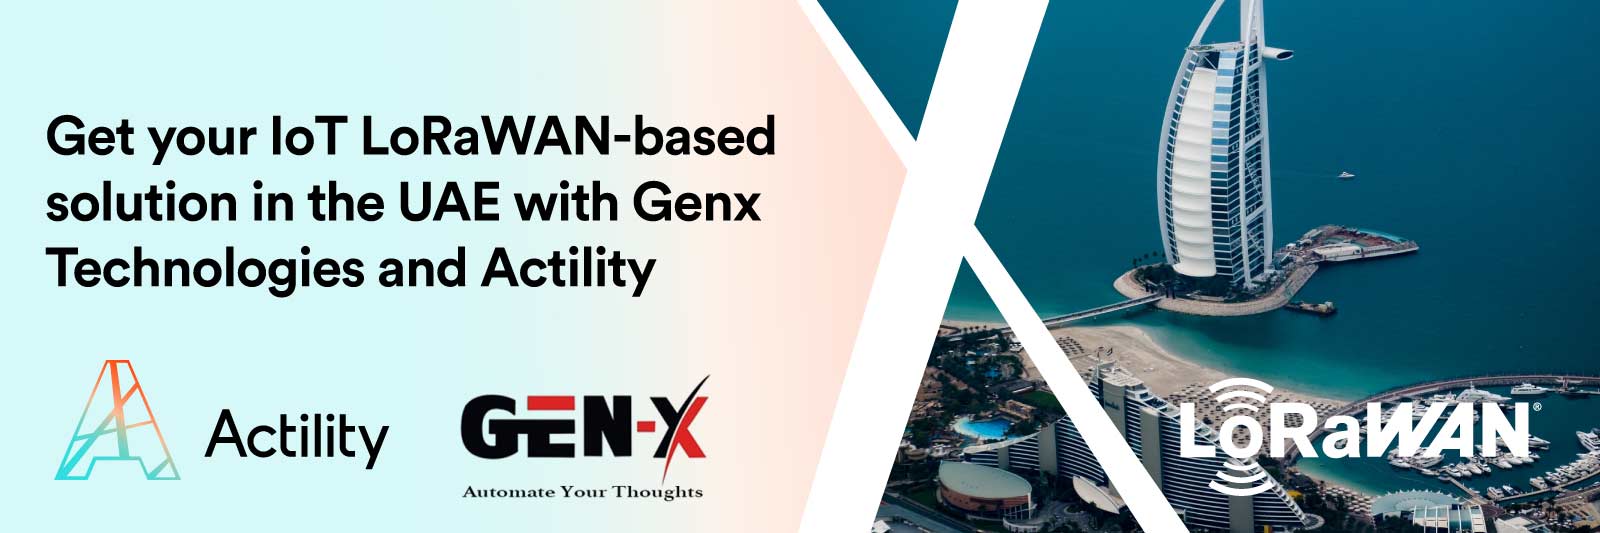 Header for Genx press release